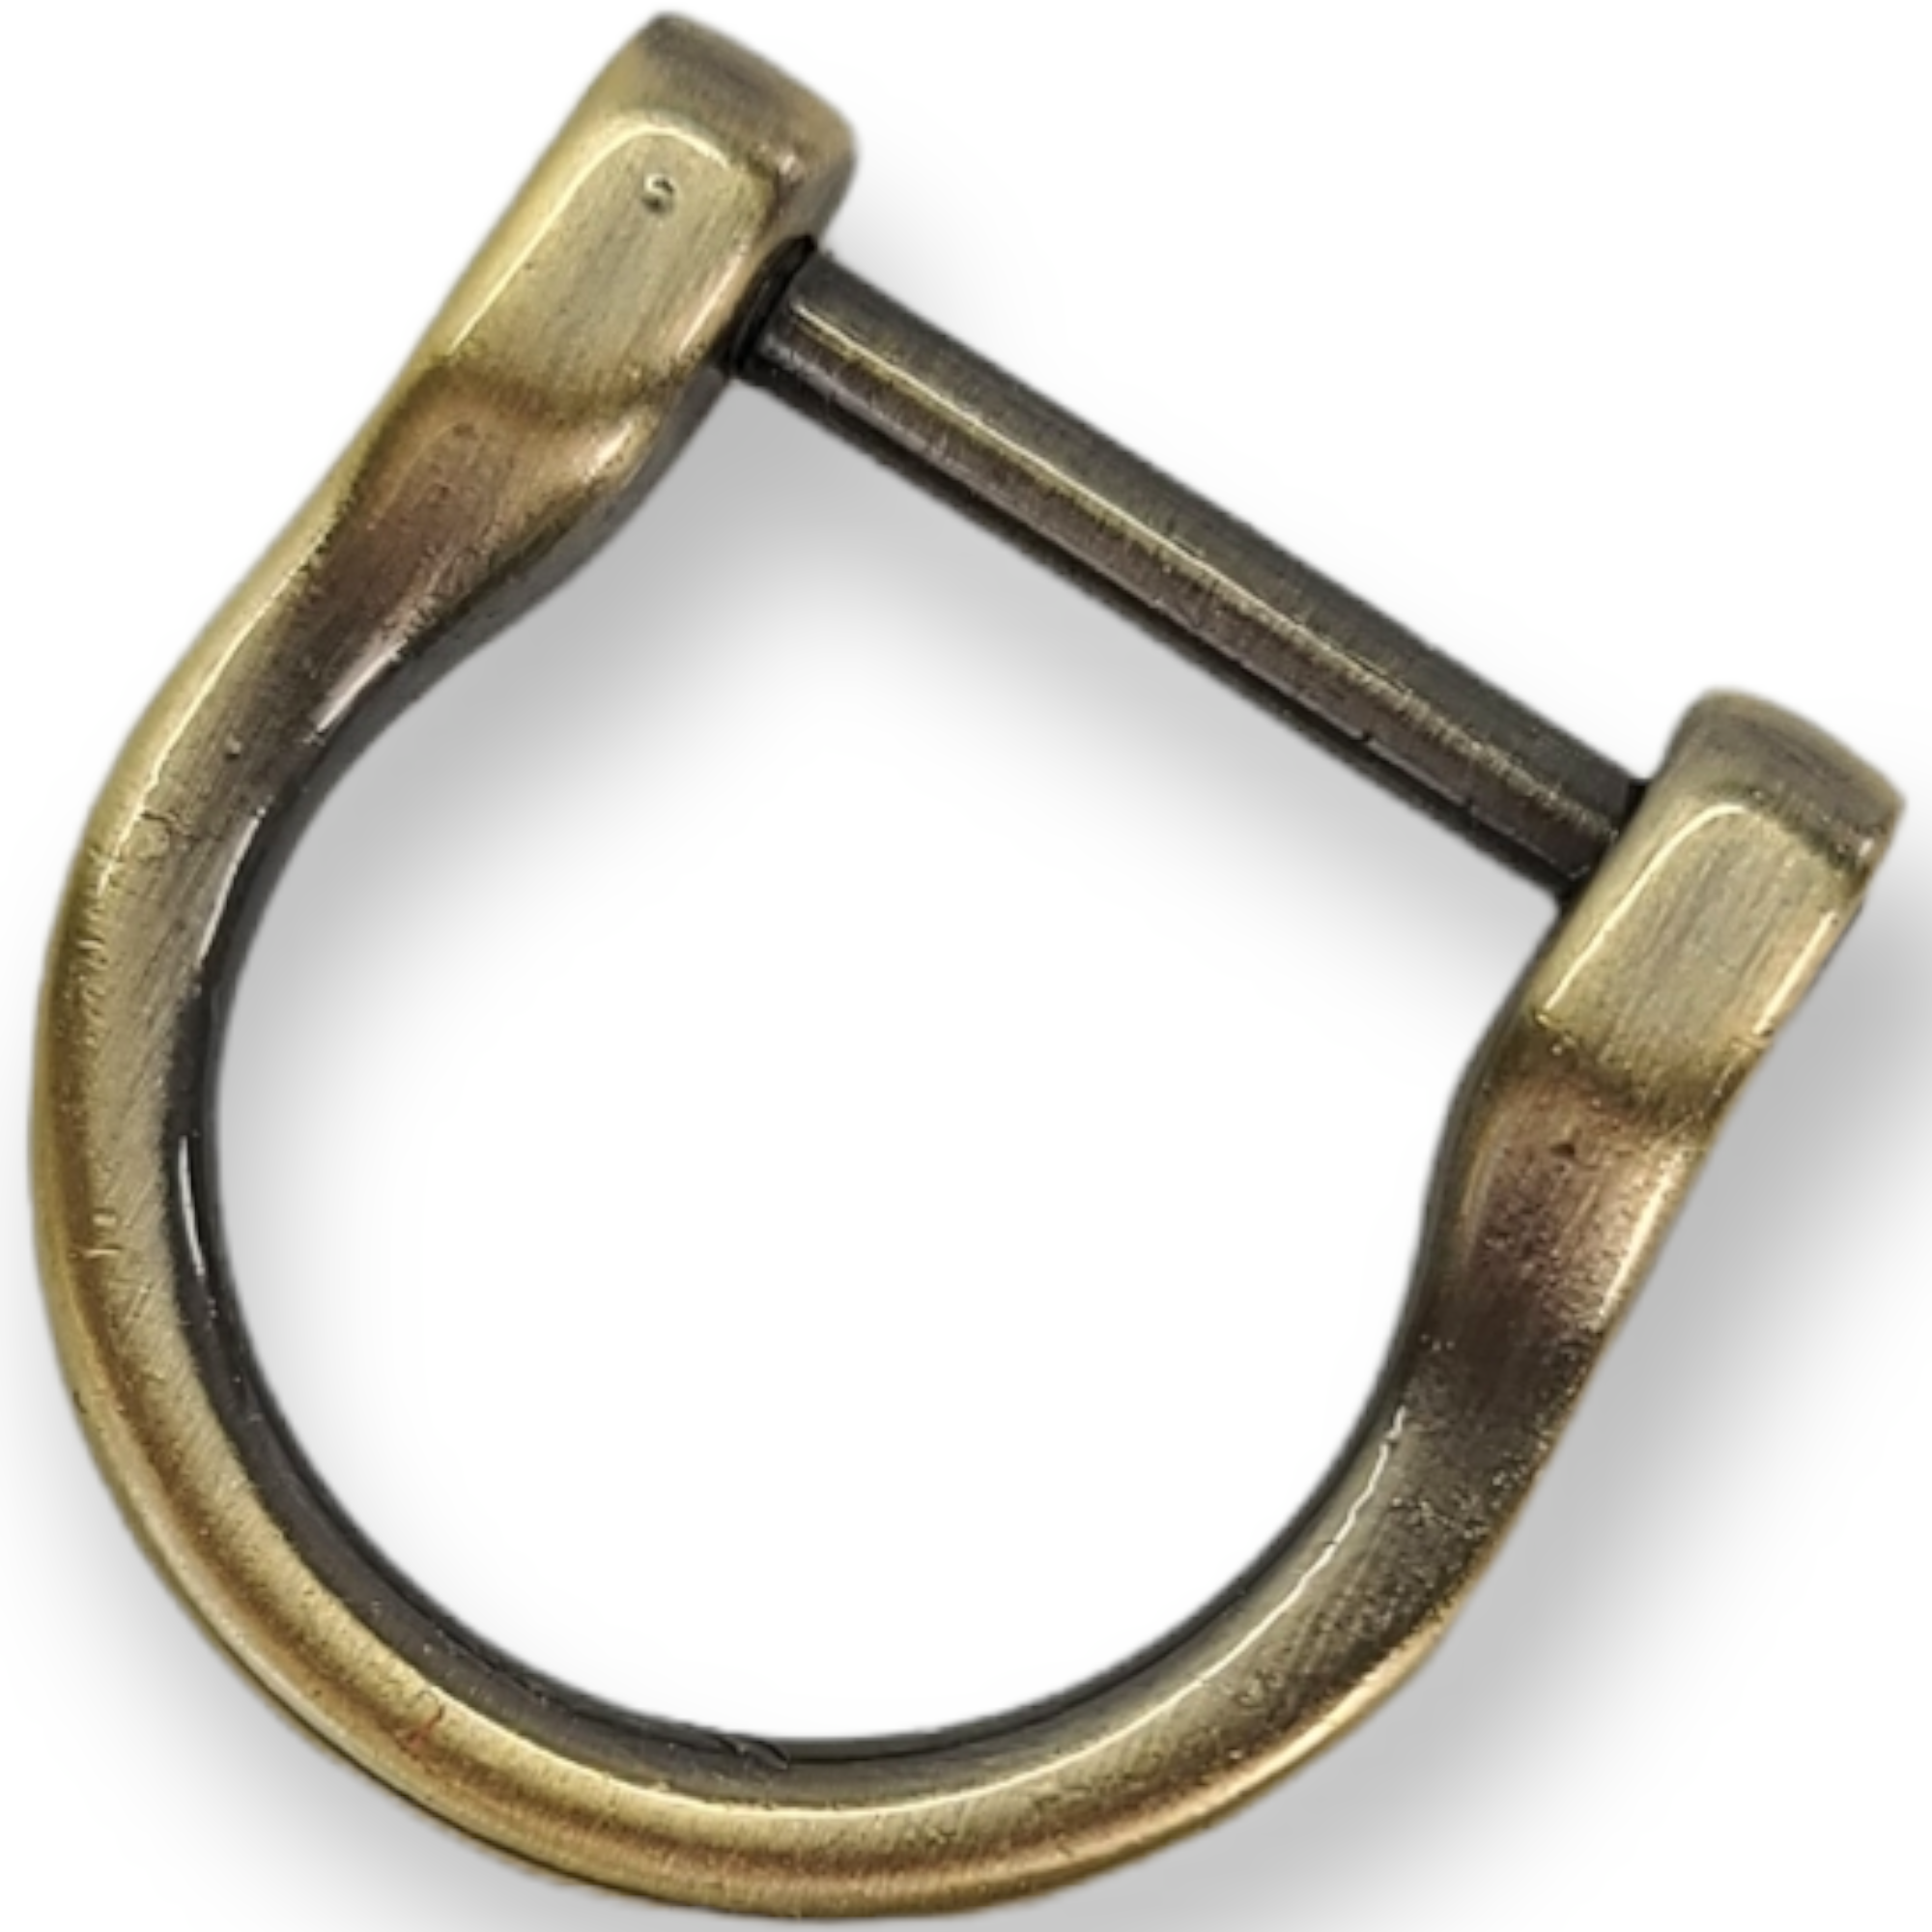 Custom Accessories D-Ring Set, 3 Pc